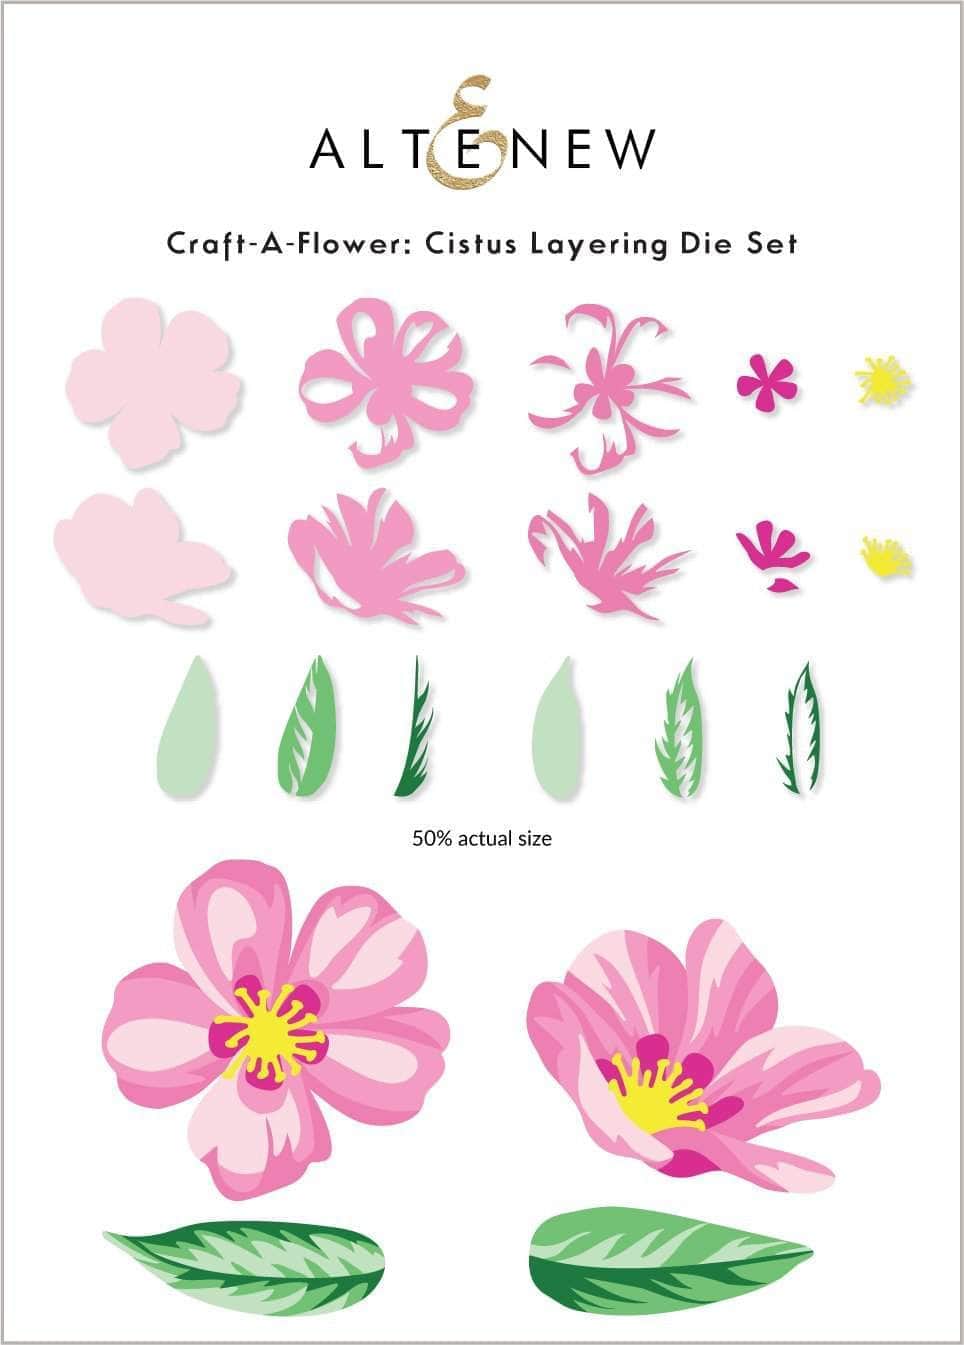 Dies Craft-A-Flower: Cistus Layering Die Set